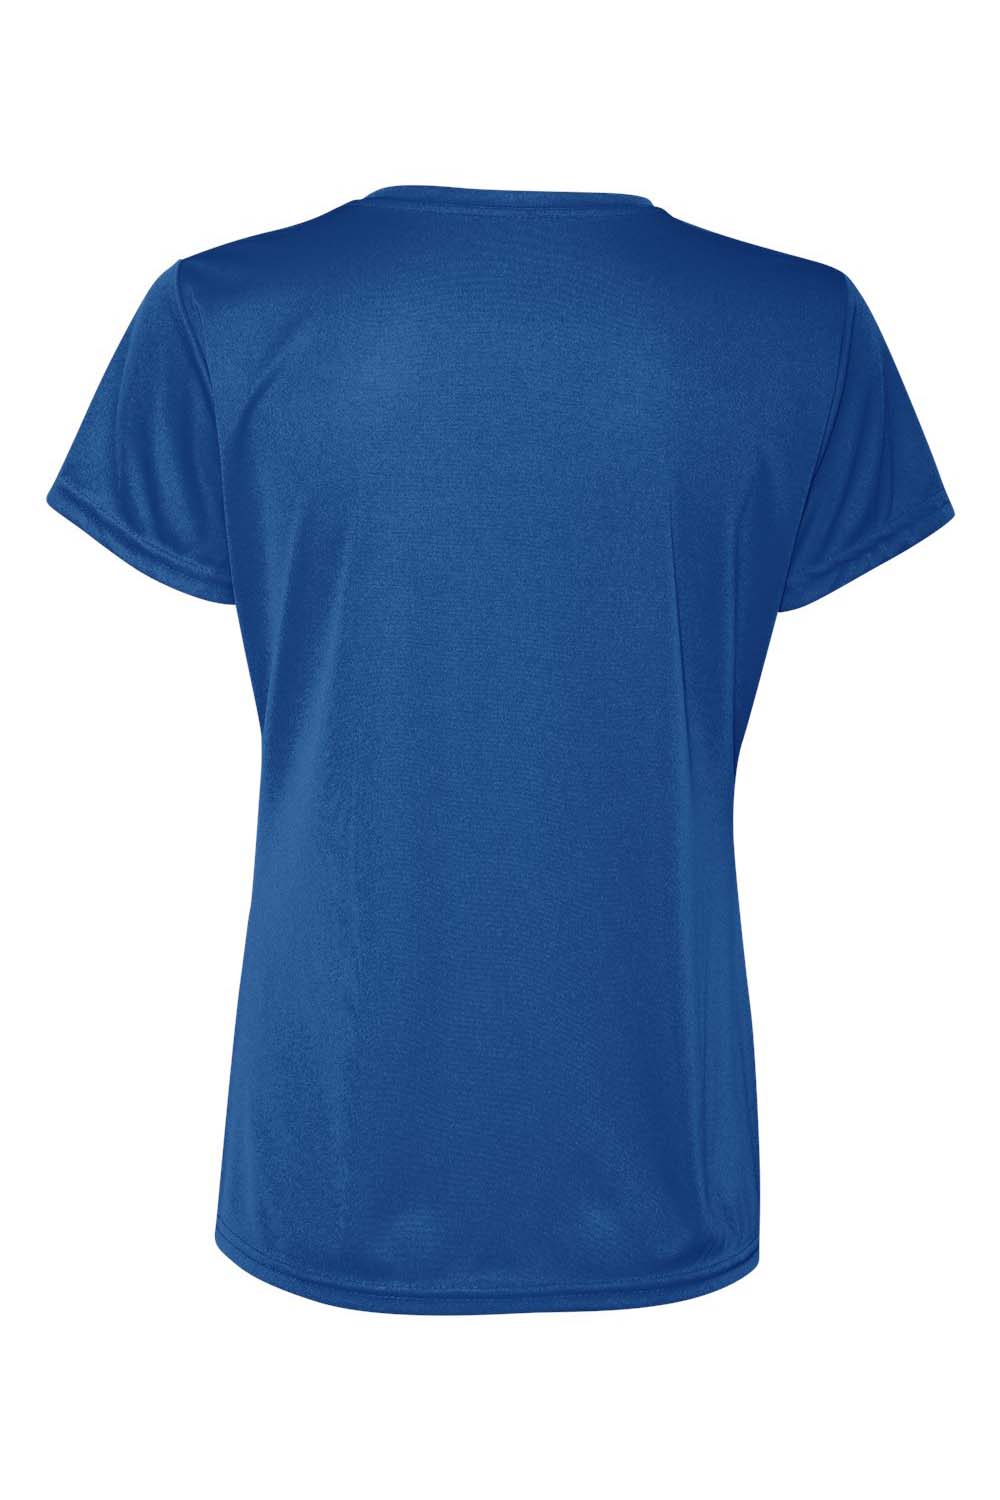 Augusta Sportswear 1790 Womens Moisture Wicking Short Sleeve V-Neck T-Shirt Royal Blue Model Flat Back